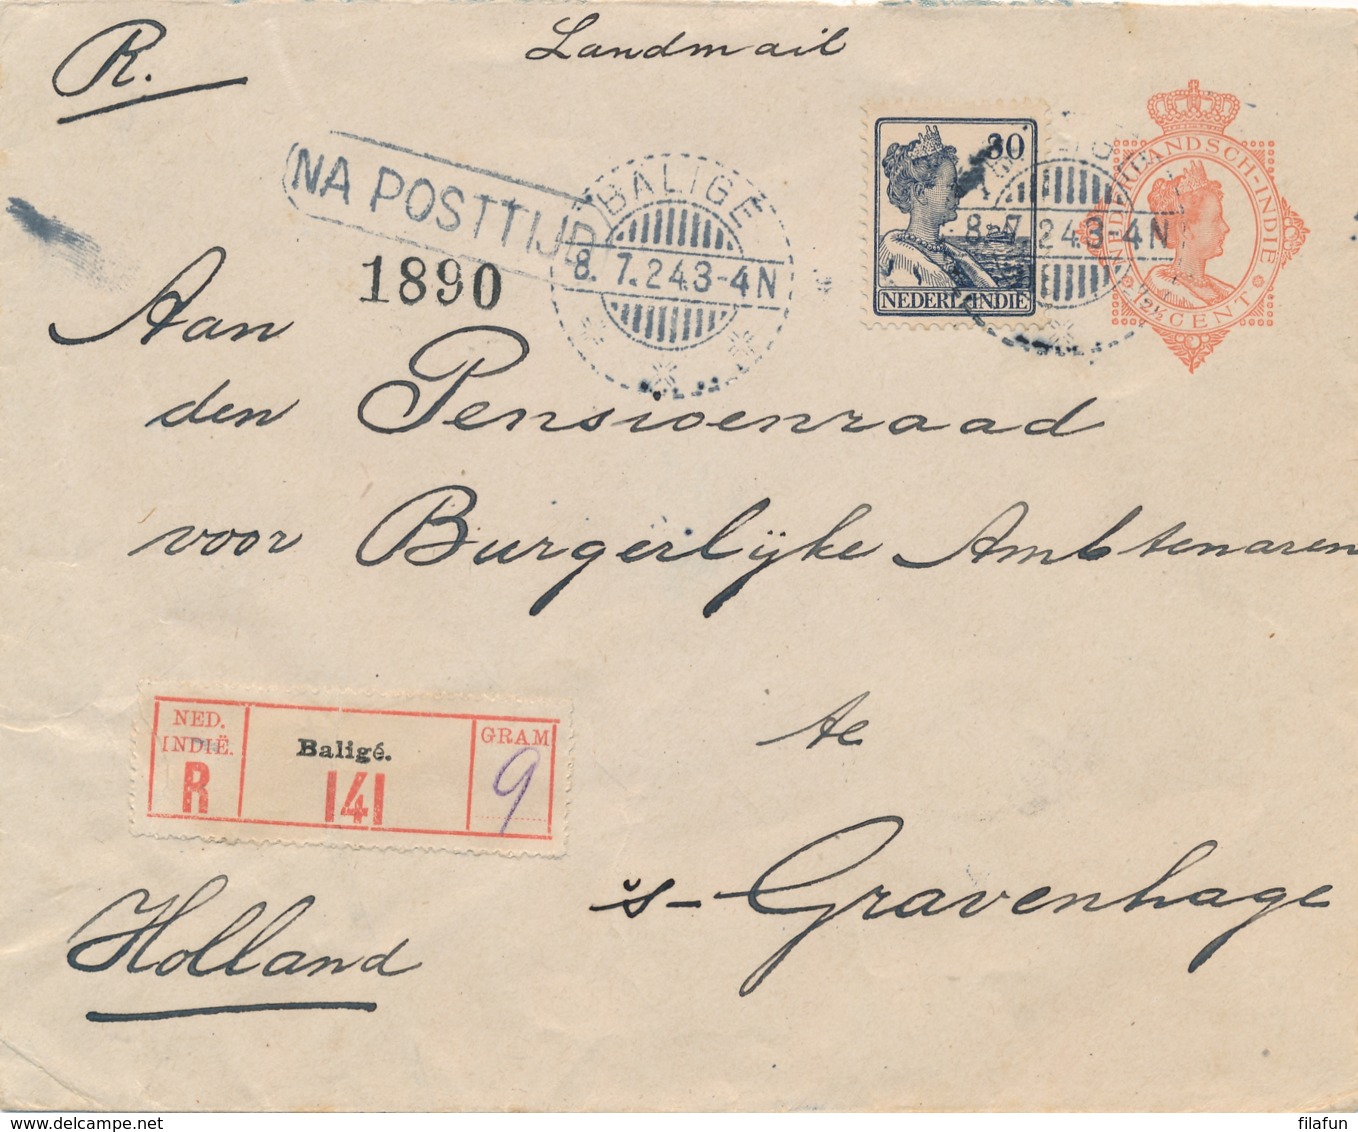 Nederlands Indië - 1924 - 12,5 Cent Wilhelmina, Envelop G43 + 30 Cent Als R-cover Van LB BALIGE - Na Posttijd Naar NL - Niederländisch-Indien